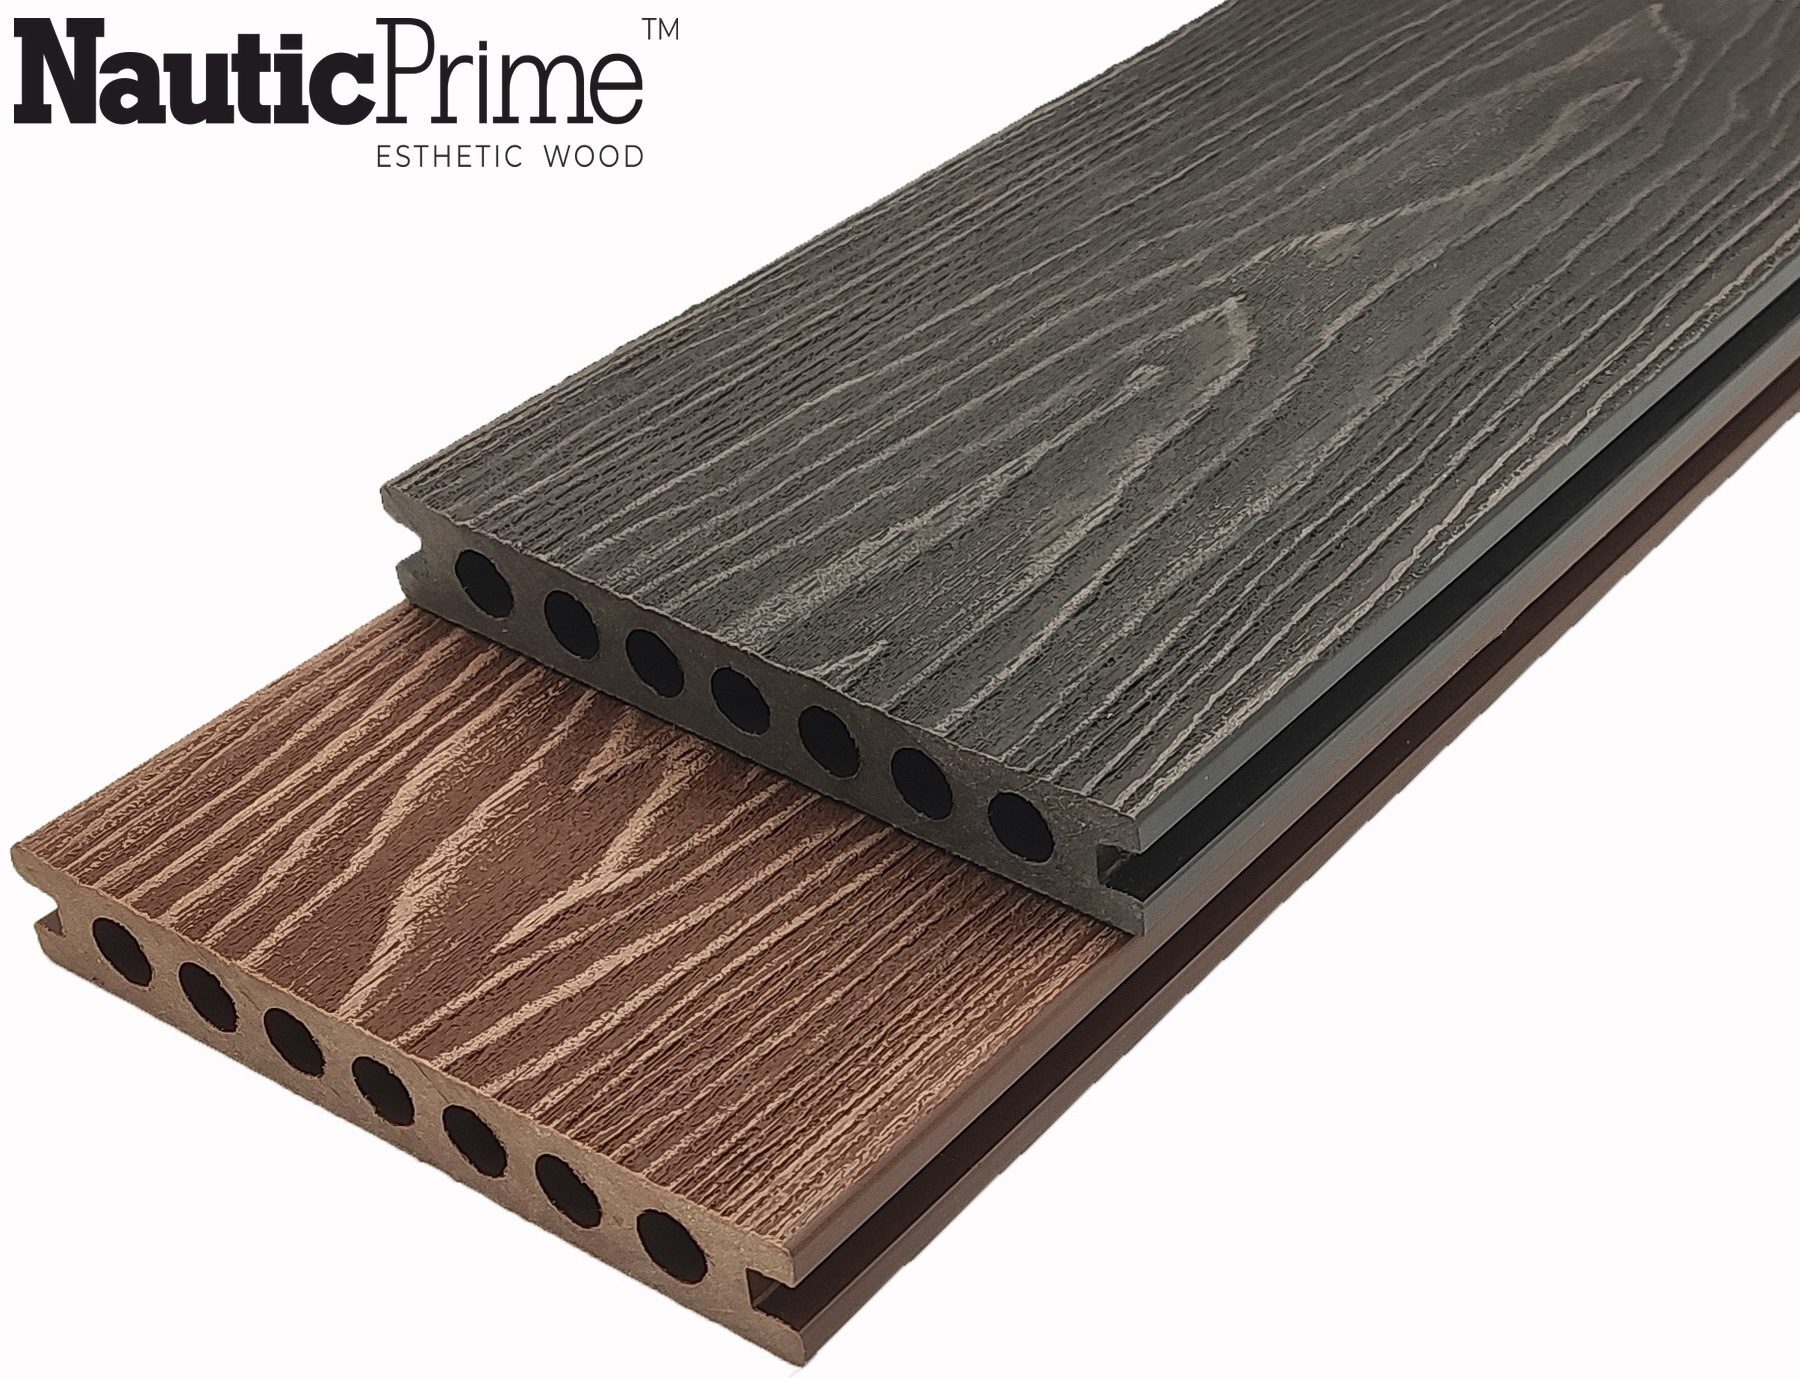 Nautic Prime Esthetic Wood